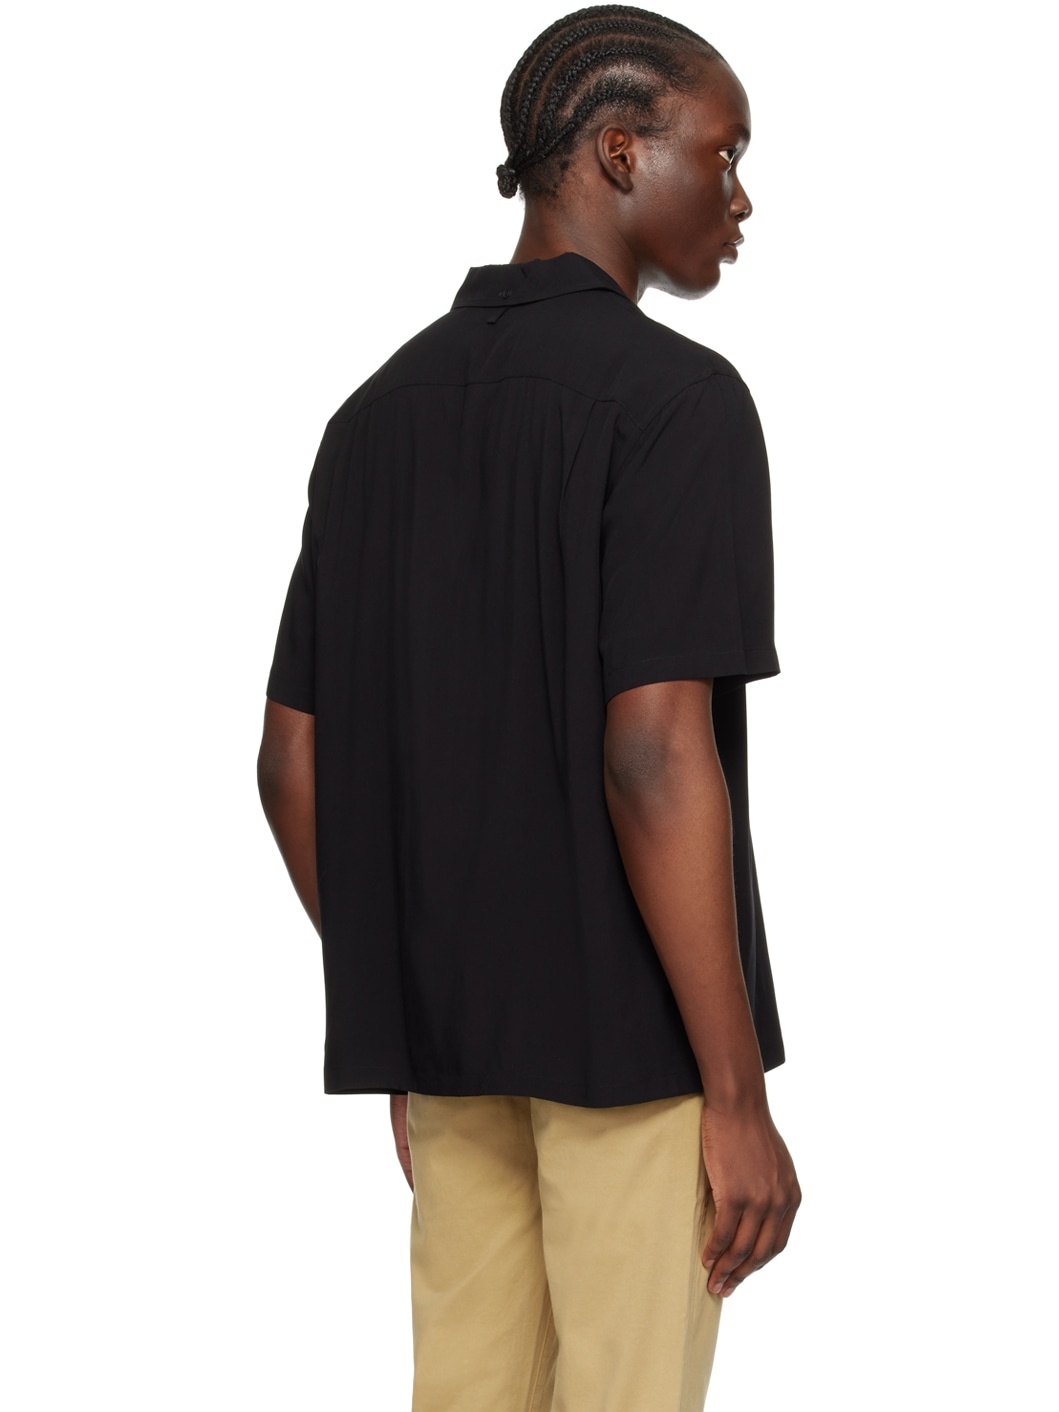 Black Avery Shirt - 3